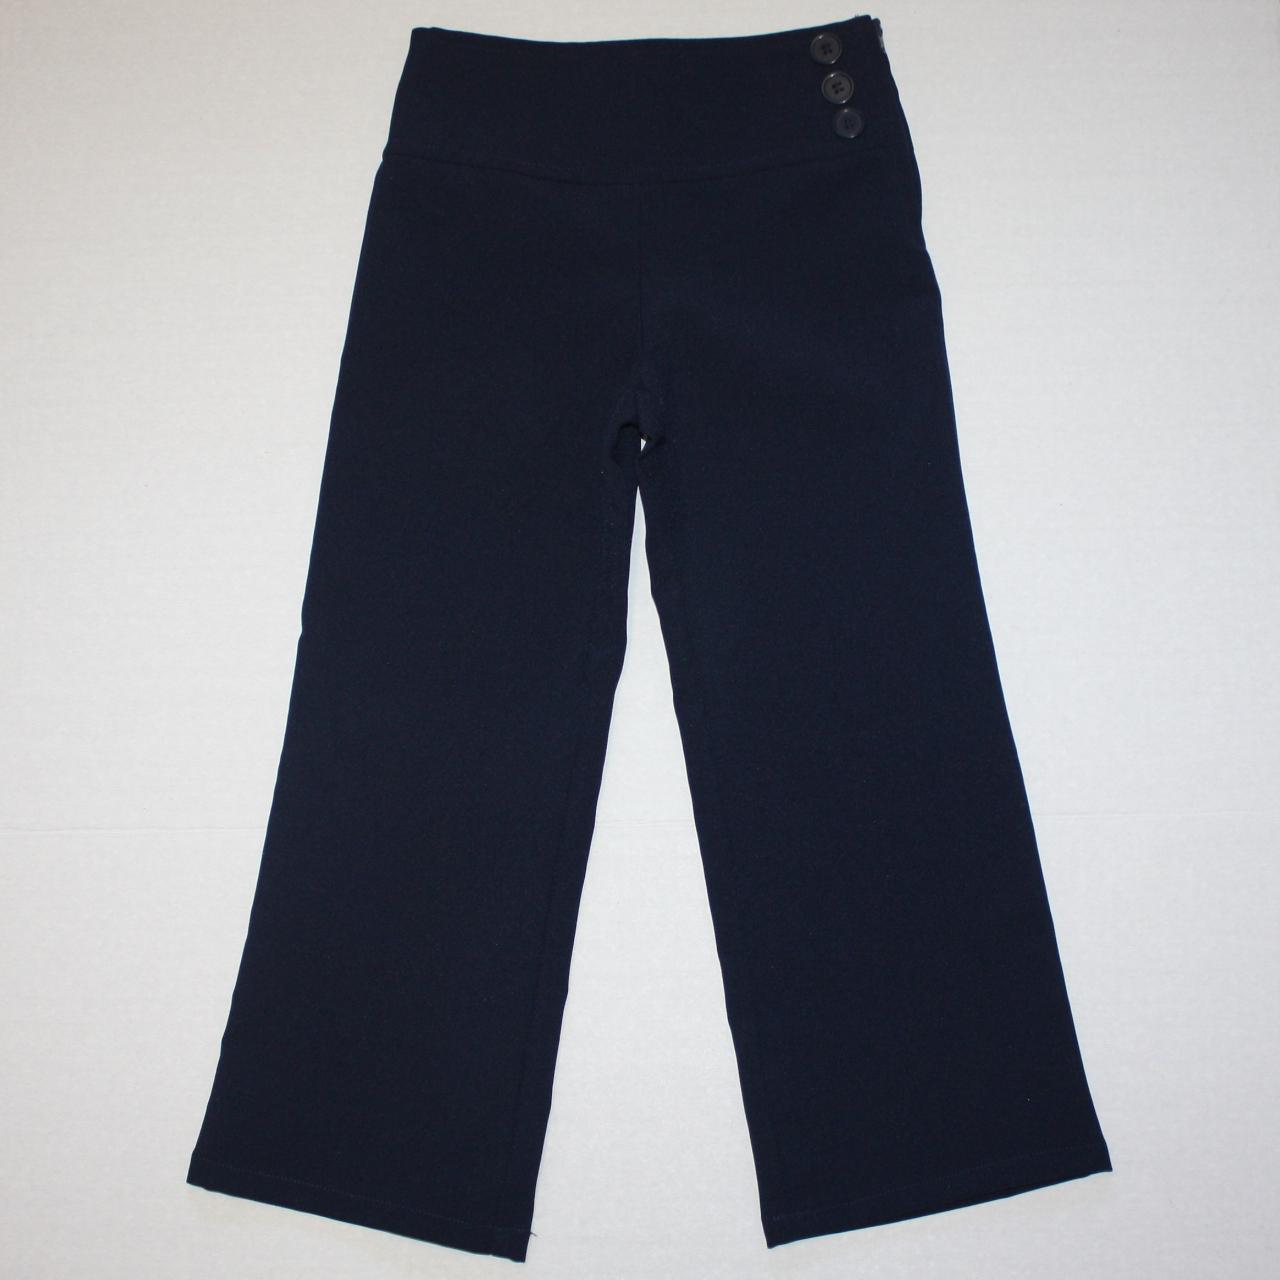 George Girl's Uniform Navy Blue Pants size 4... - Depop